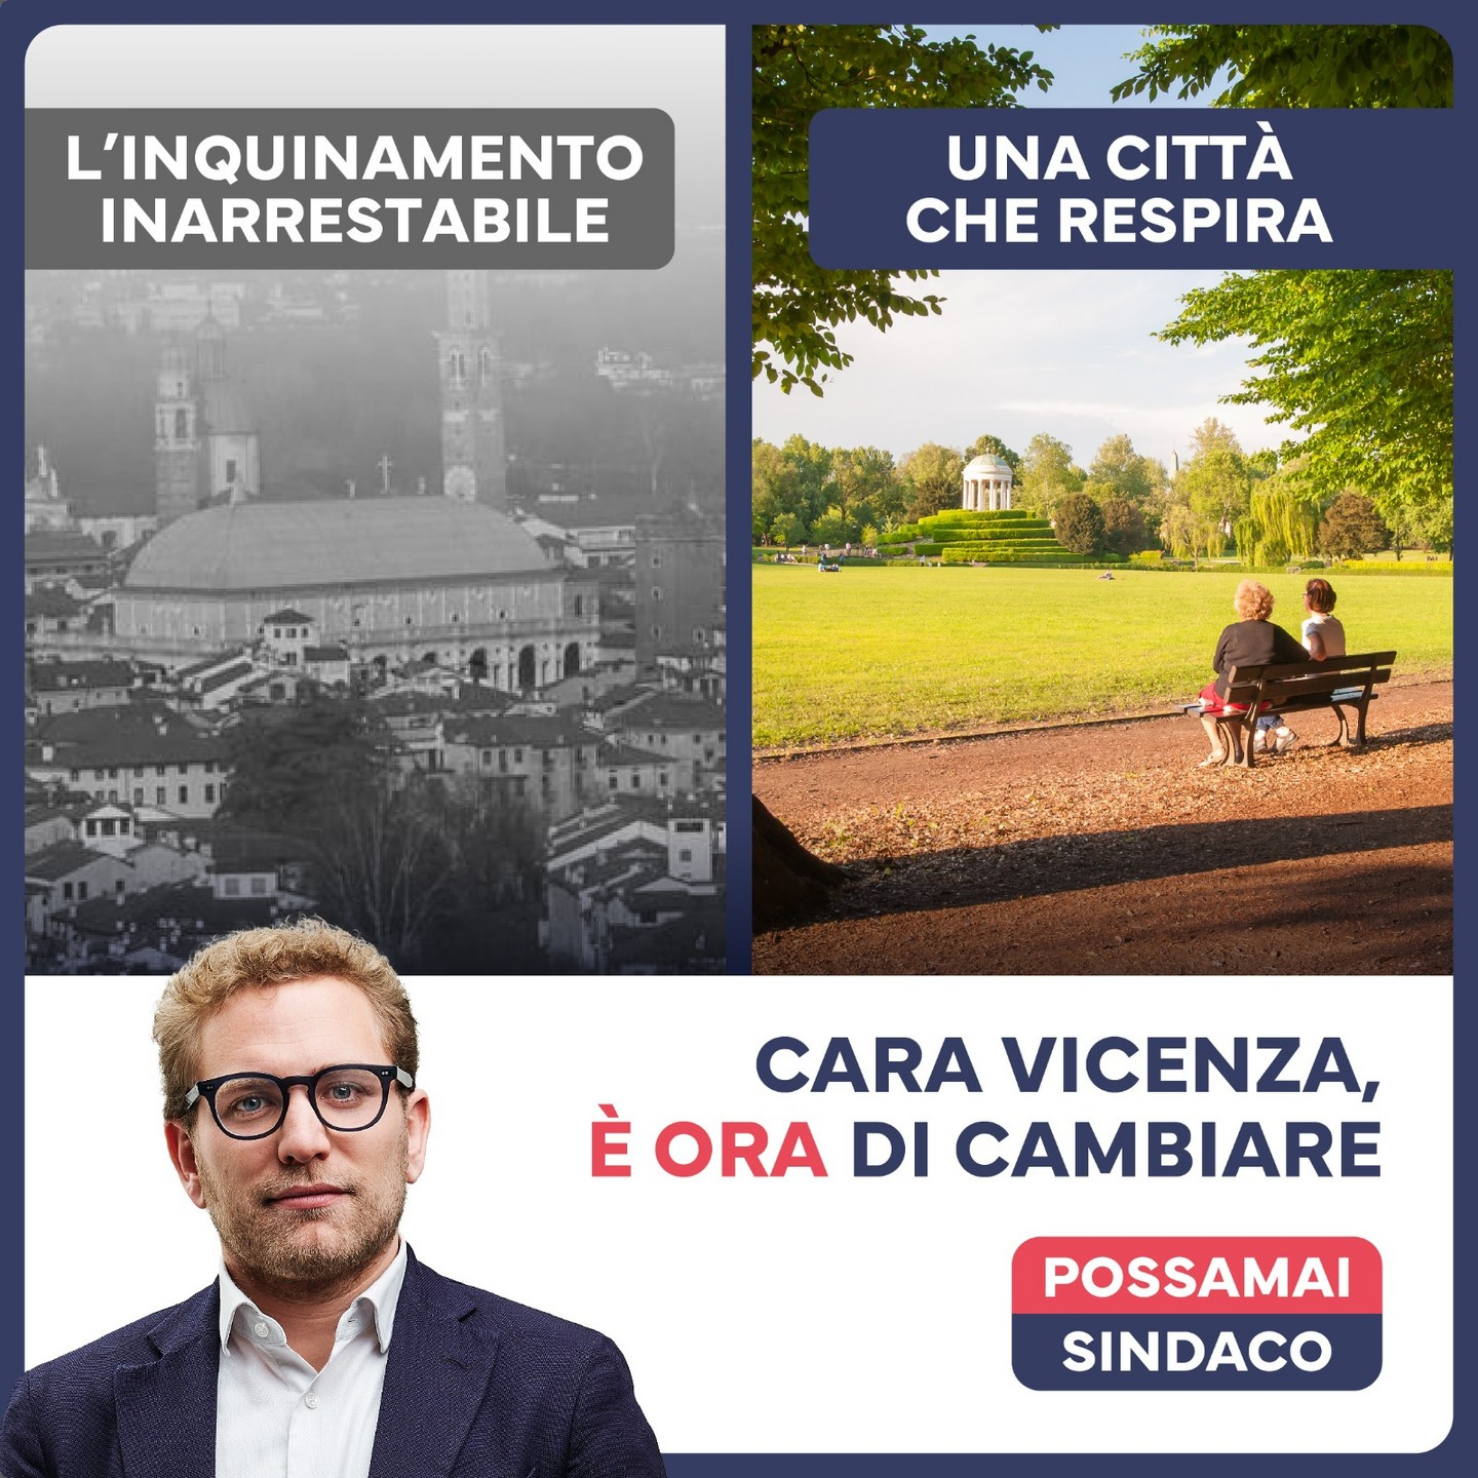 Cara Vicenza, è ora di cambiare: una città che respira!